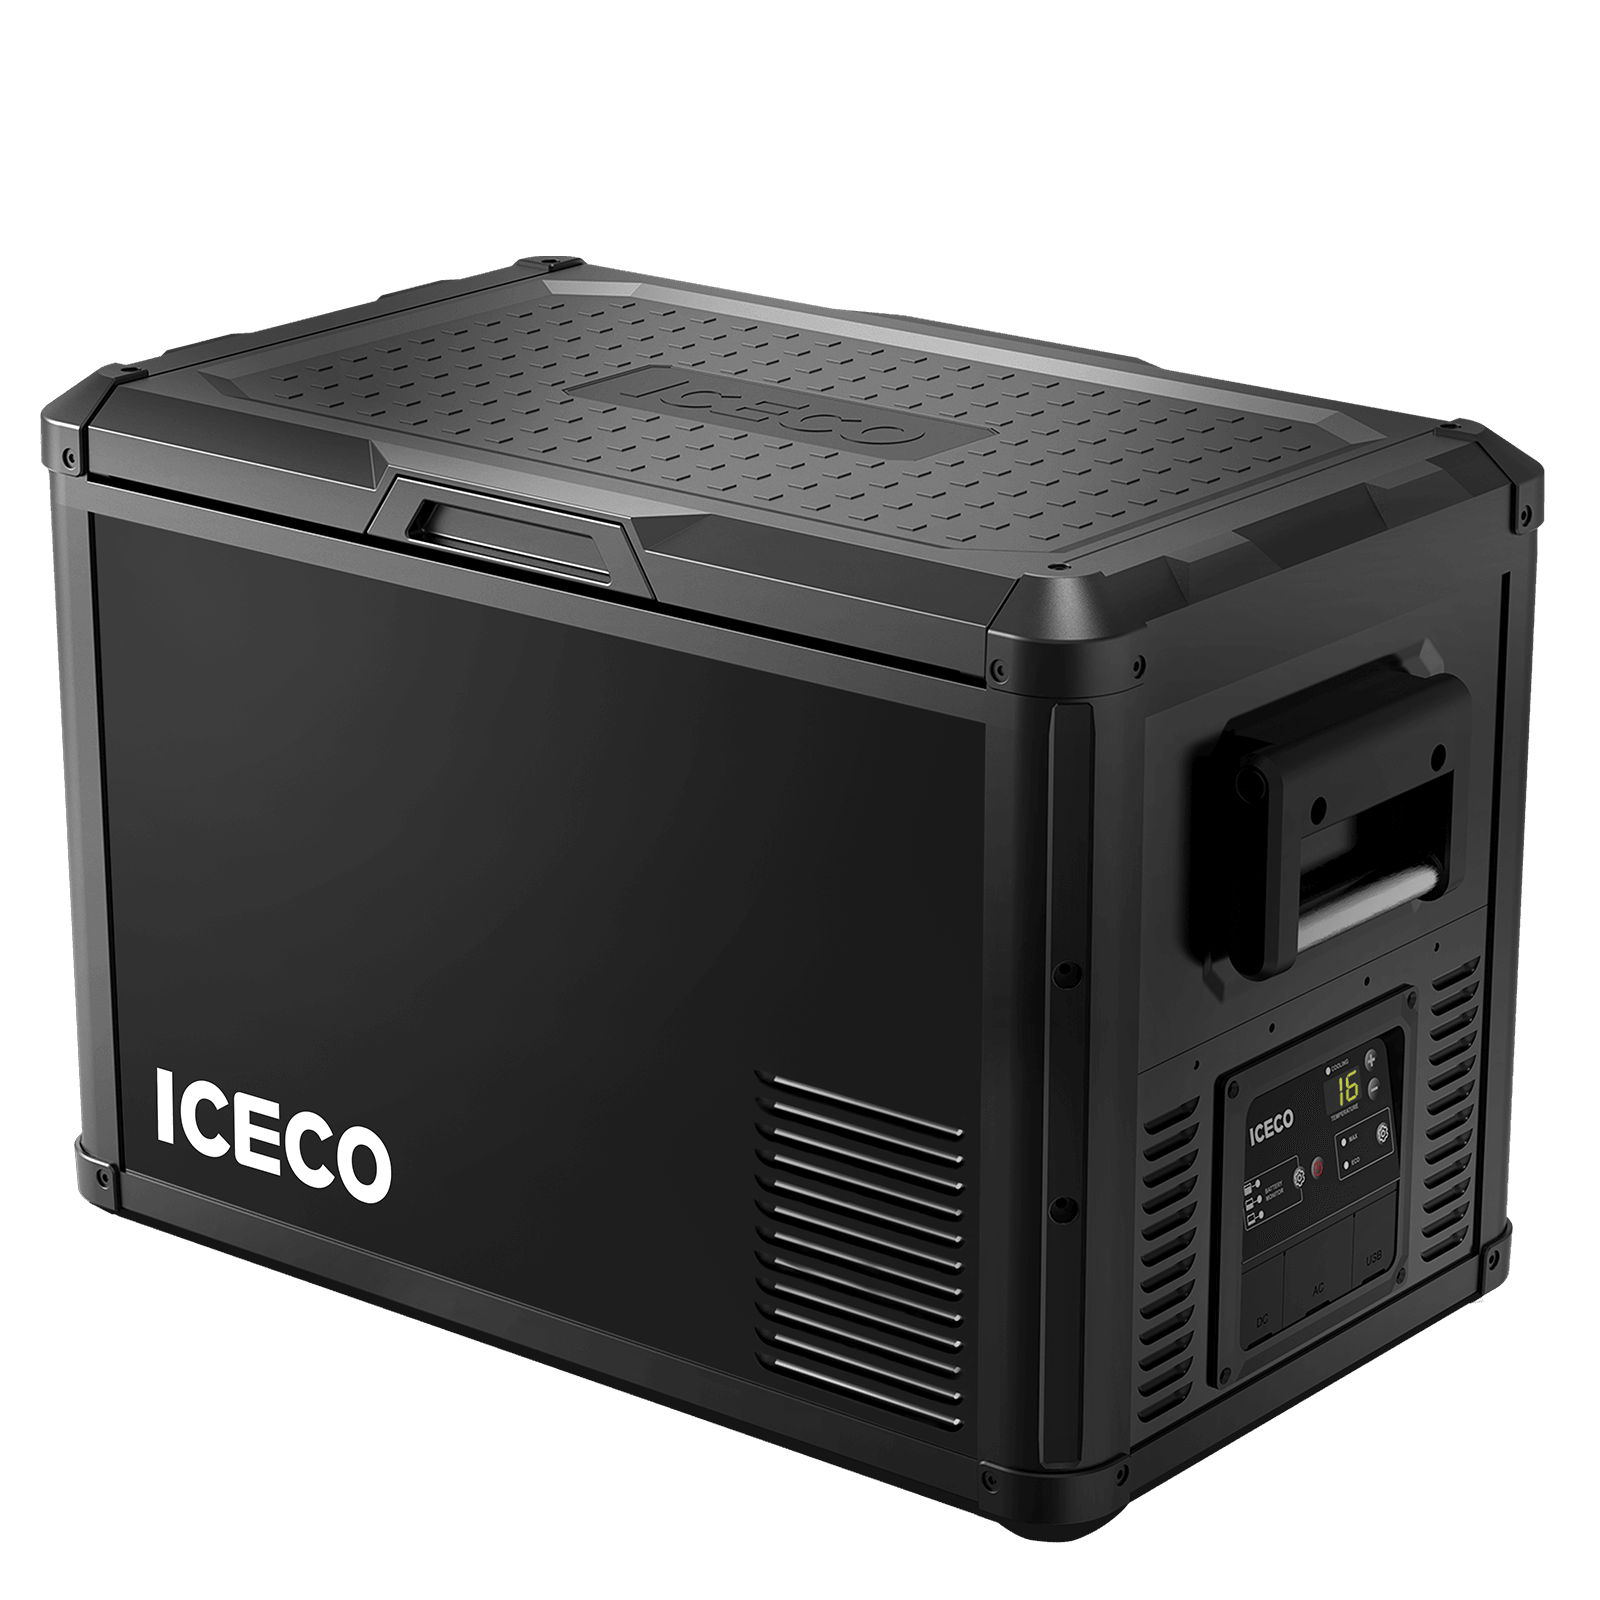 ICECO VL45ProS 47.5QT Single Zone Portable Electric Cooler Compact  Refrigerators – ICECOFREEZER